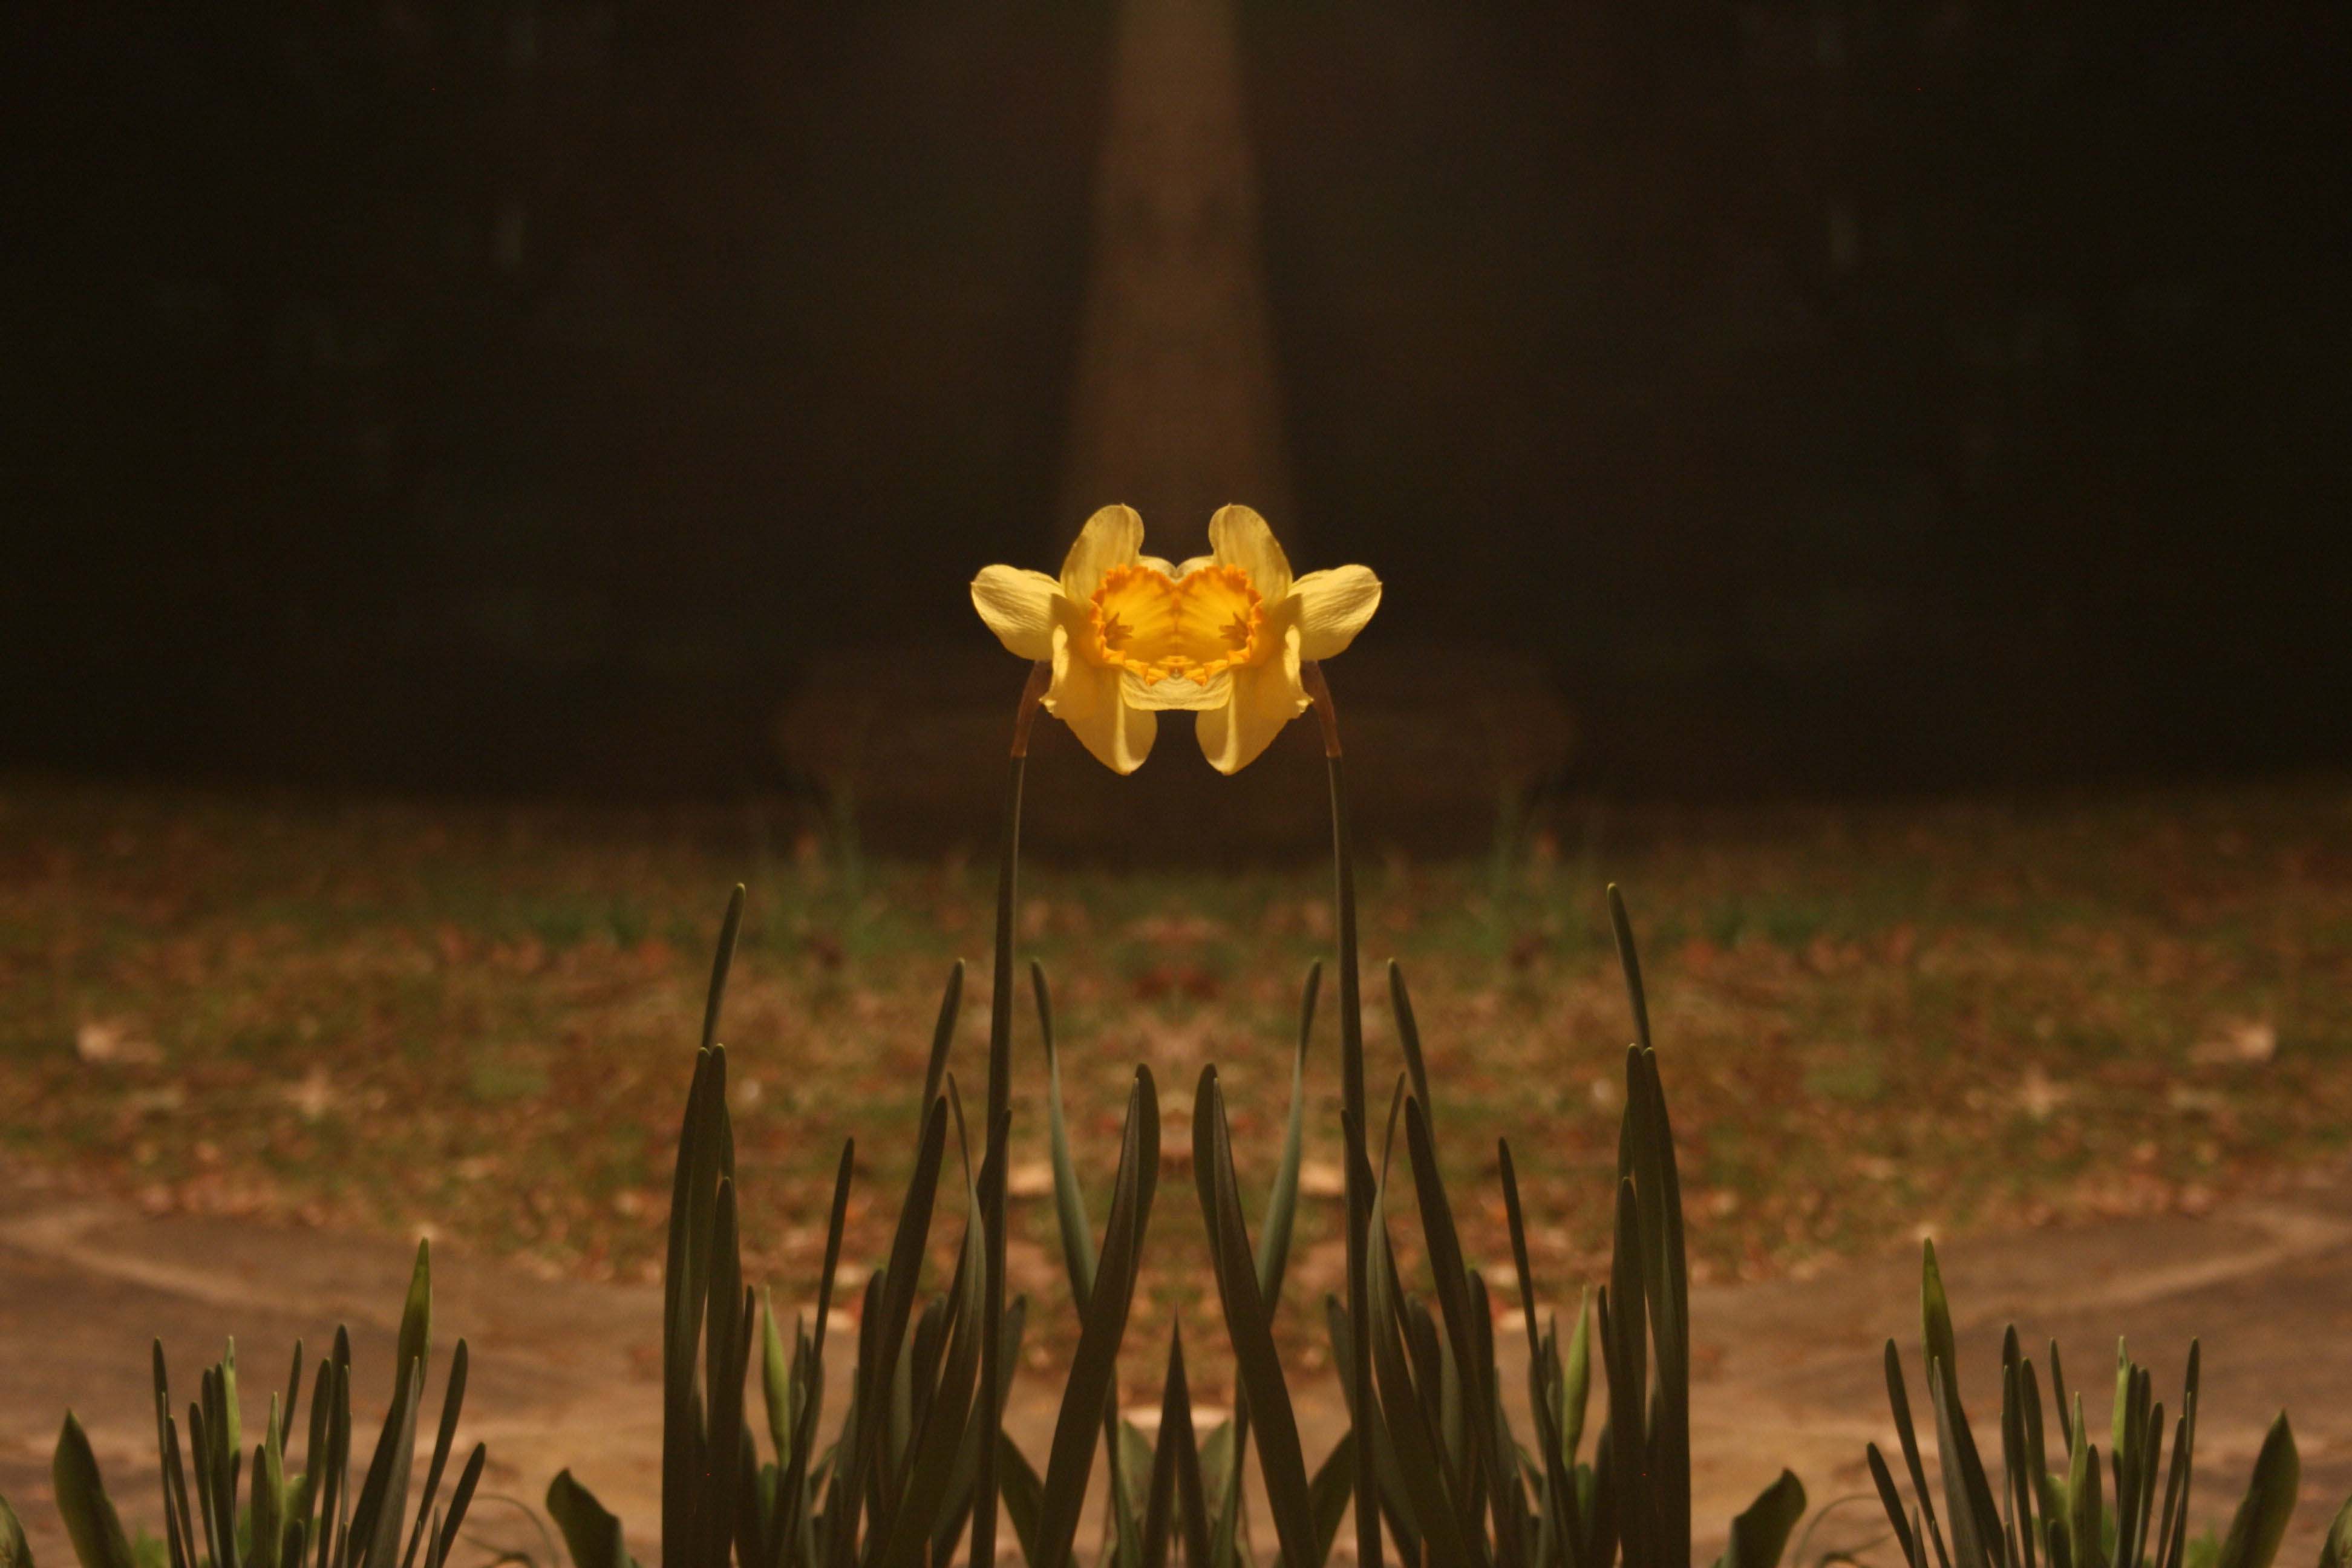 night daffodil mirror